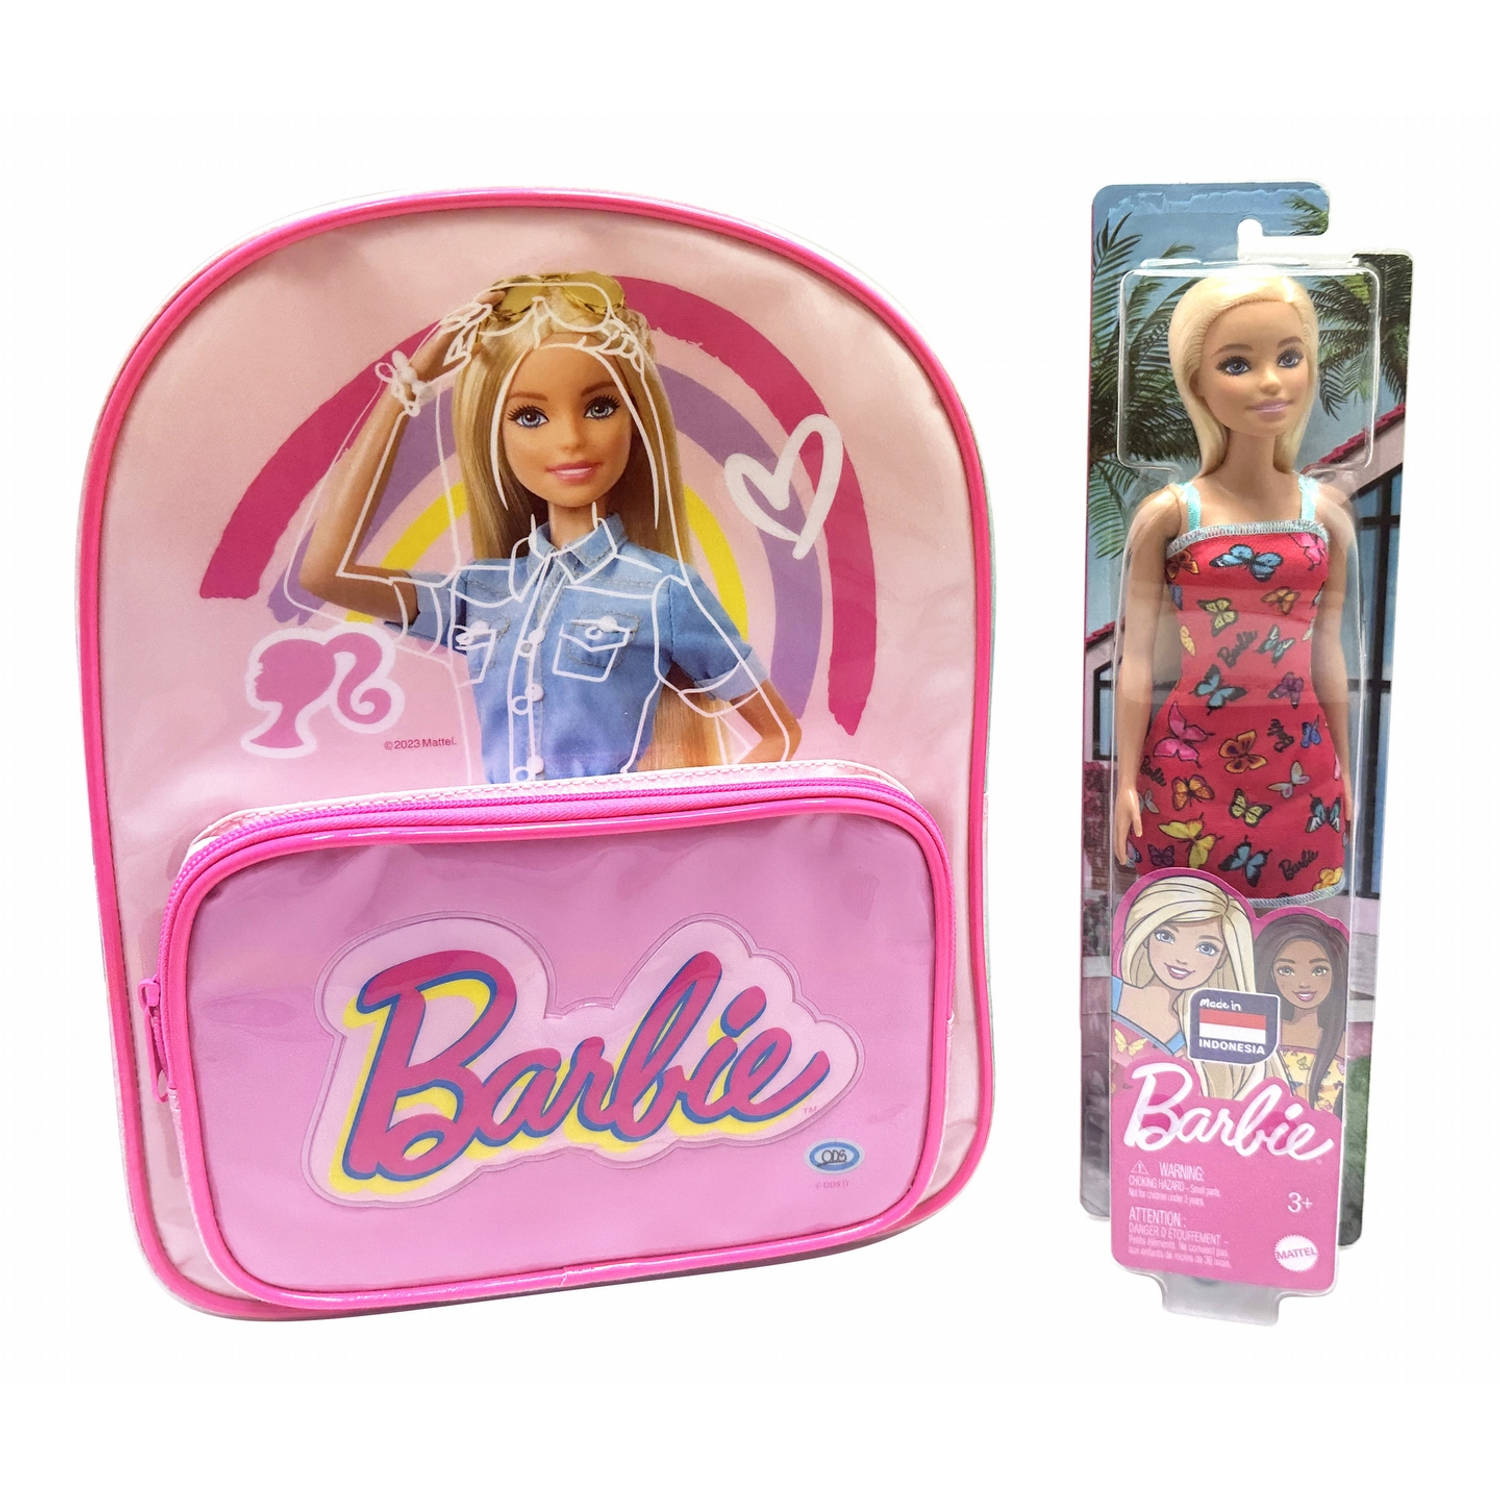 Barbie rugzak met Barbie fashionpop